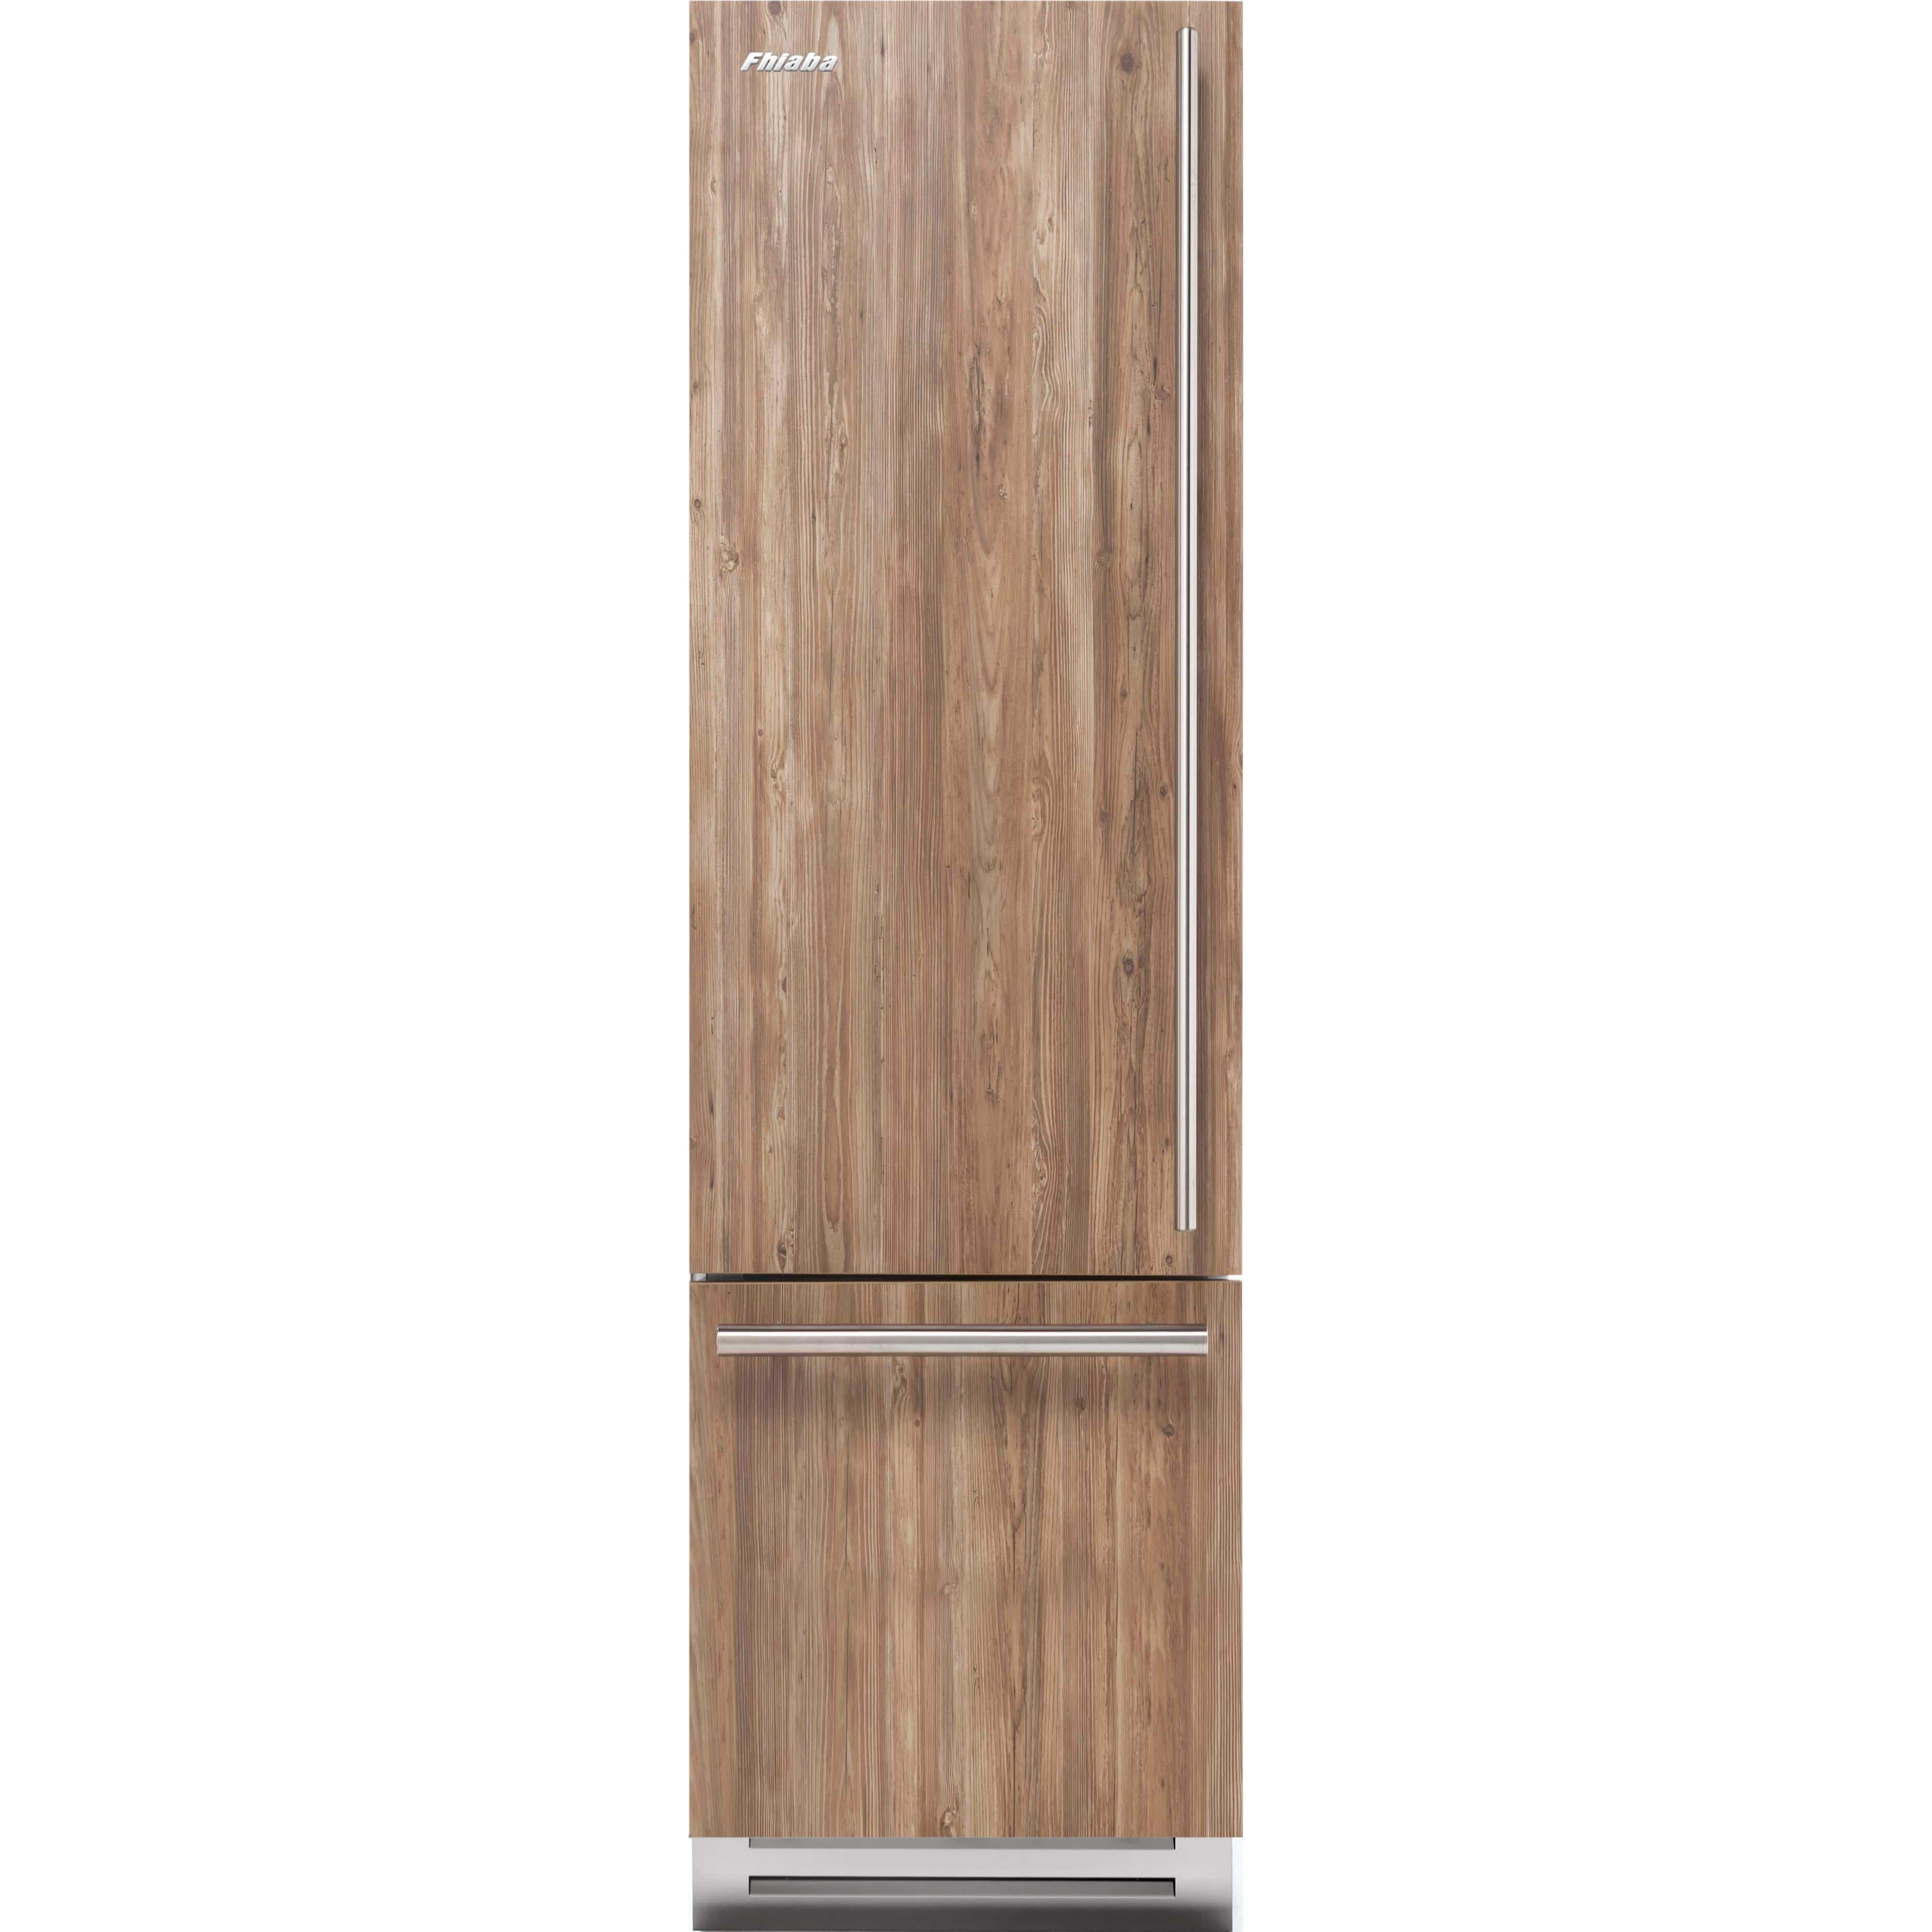 Fhiaba 24-inch, 11.58 cu. ft. Bottom Freezer Refrigerator FI24B-LO1 Refrigerators FI24BLO1 Luxury Appliances Direct